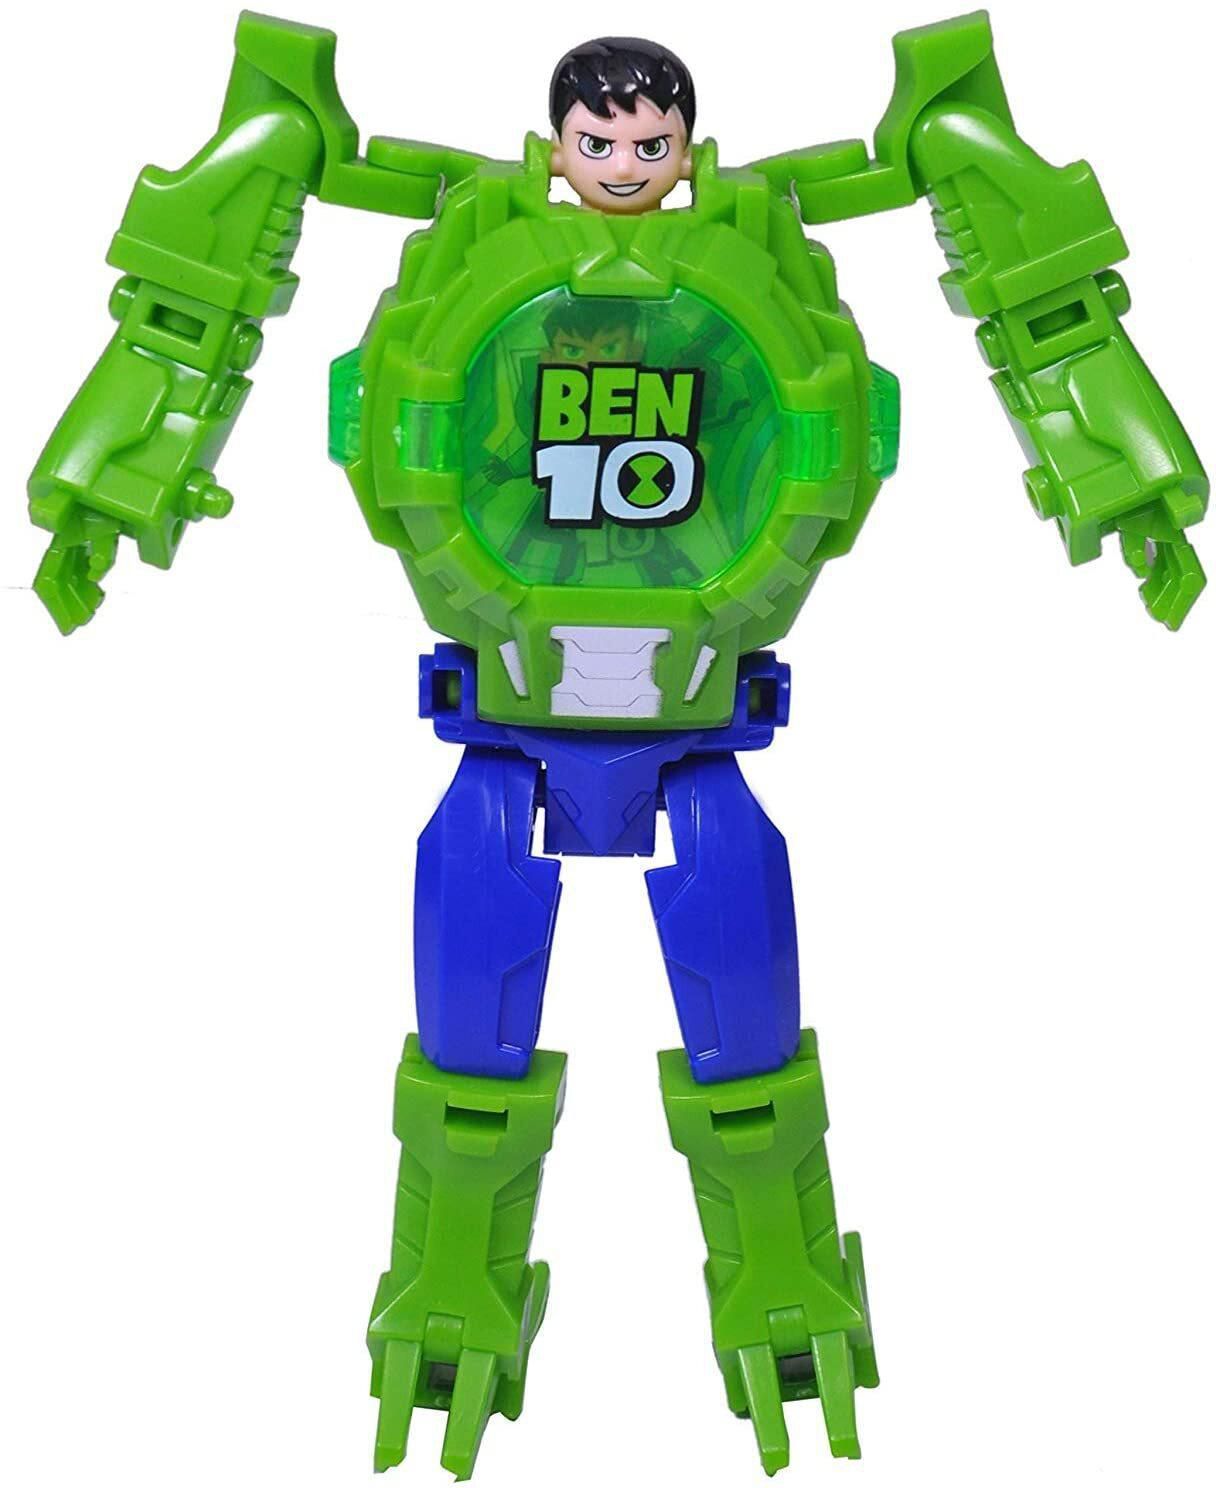 Ben 10 Transformer Robot Toy Convert To Digital Wrist Watch Deformation Watch To Ben 10 Creative Best Educational Learning Toys . Green